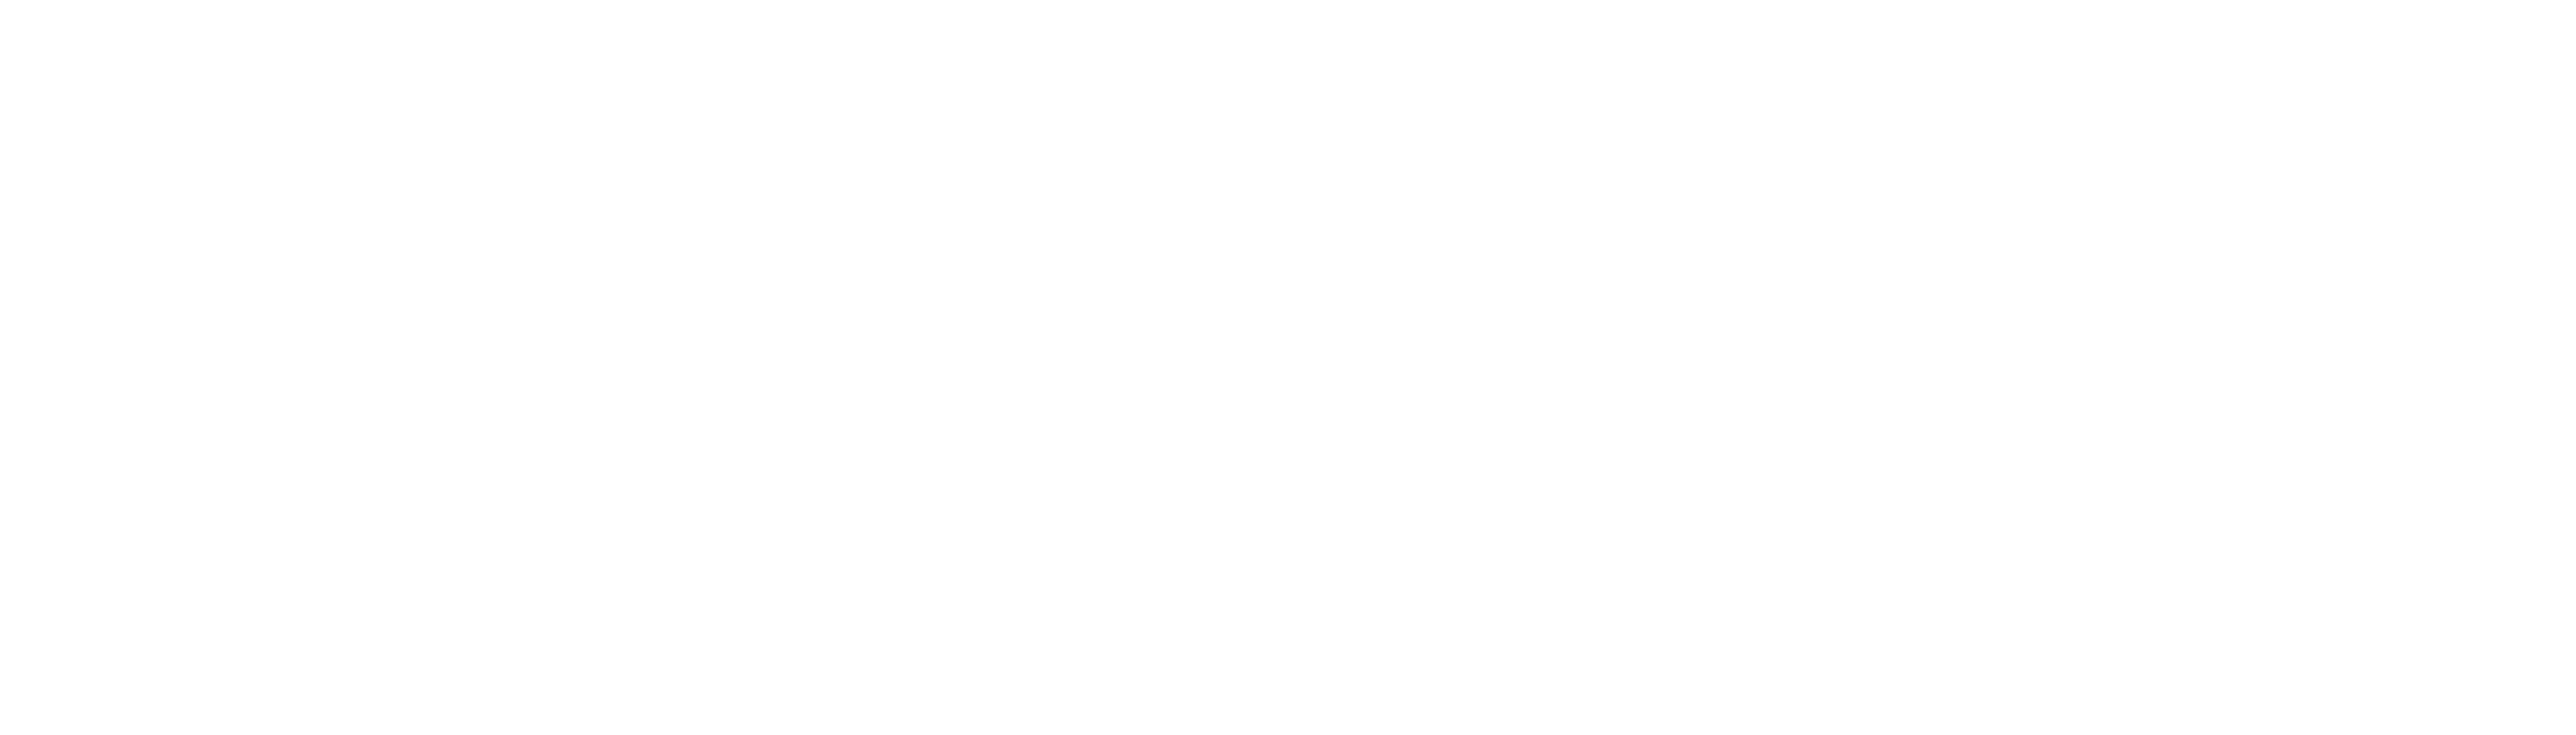 Logo afiliapub